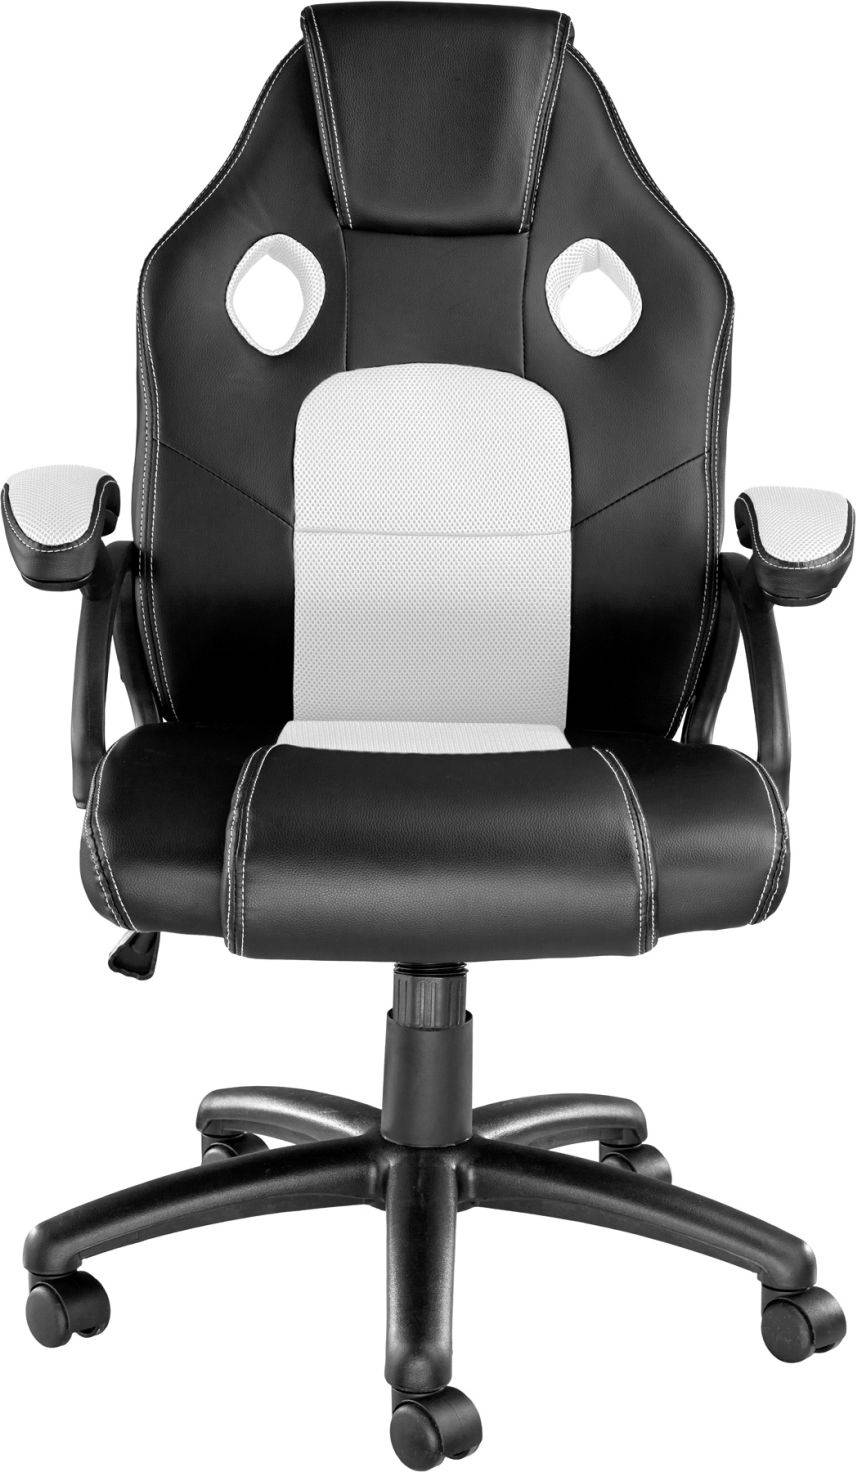  Bild på tectake Mike Gaming Chair - Black/White gamingstol